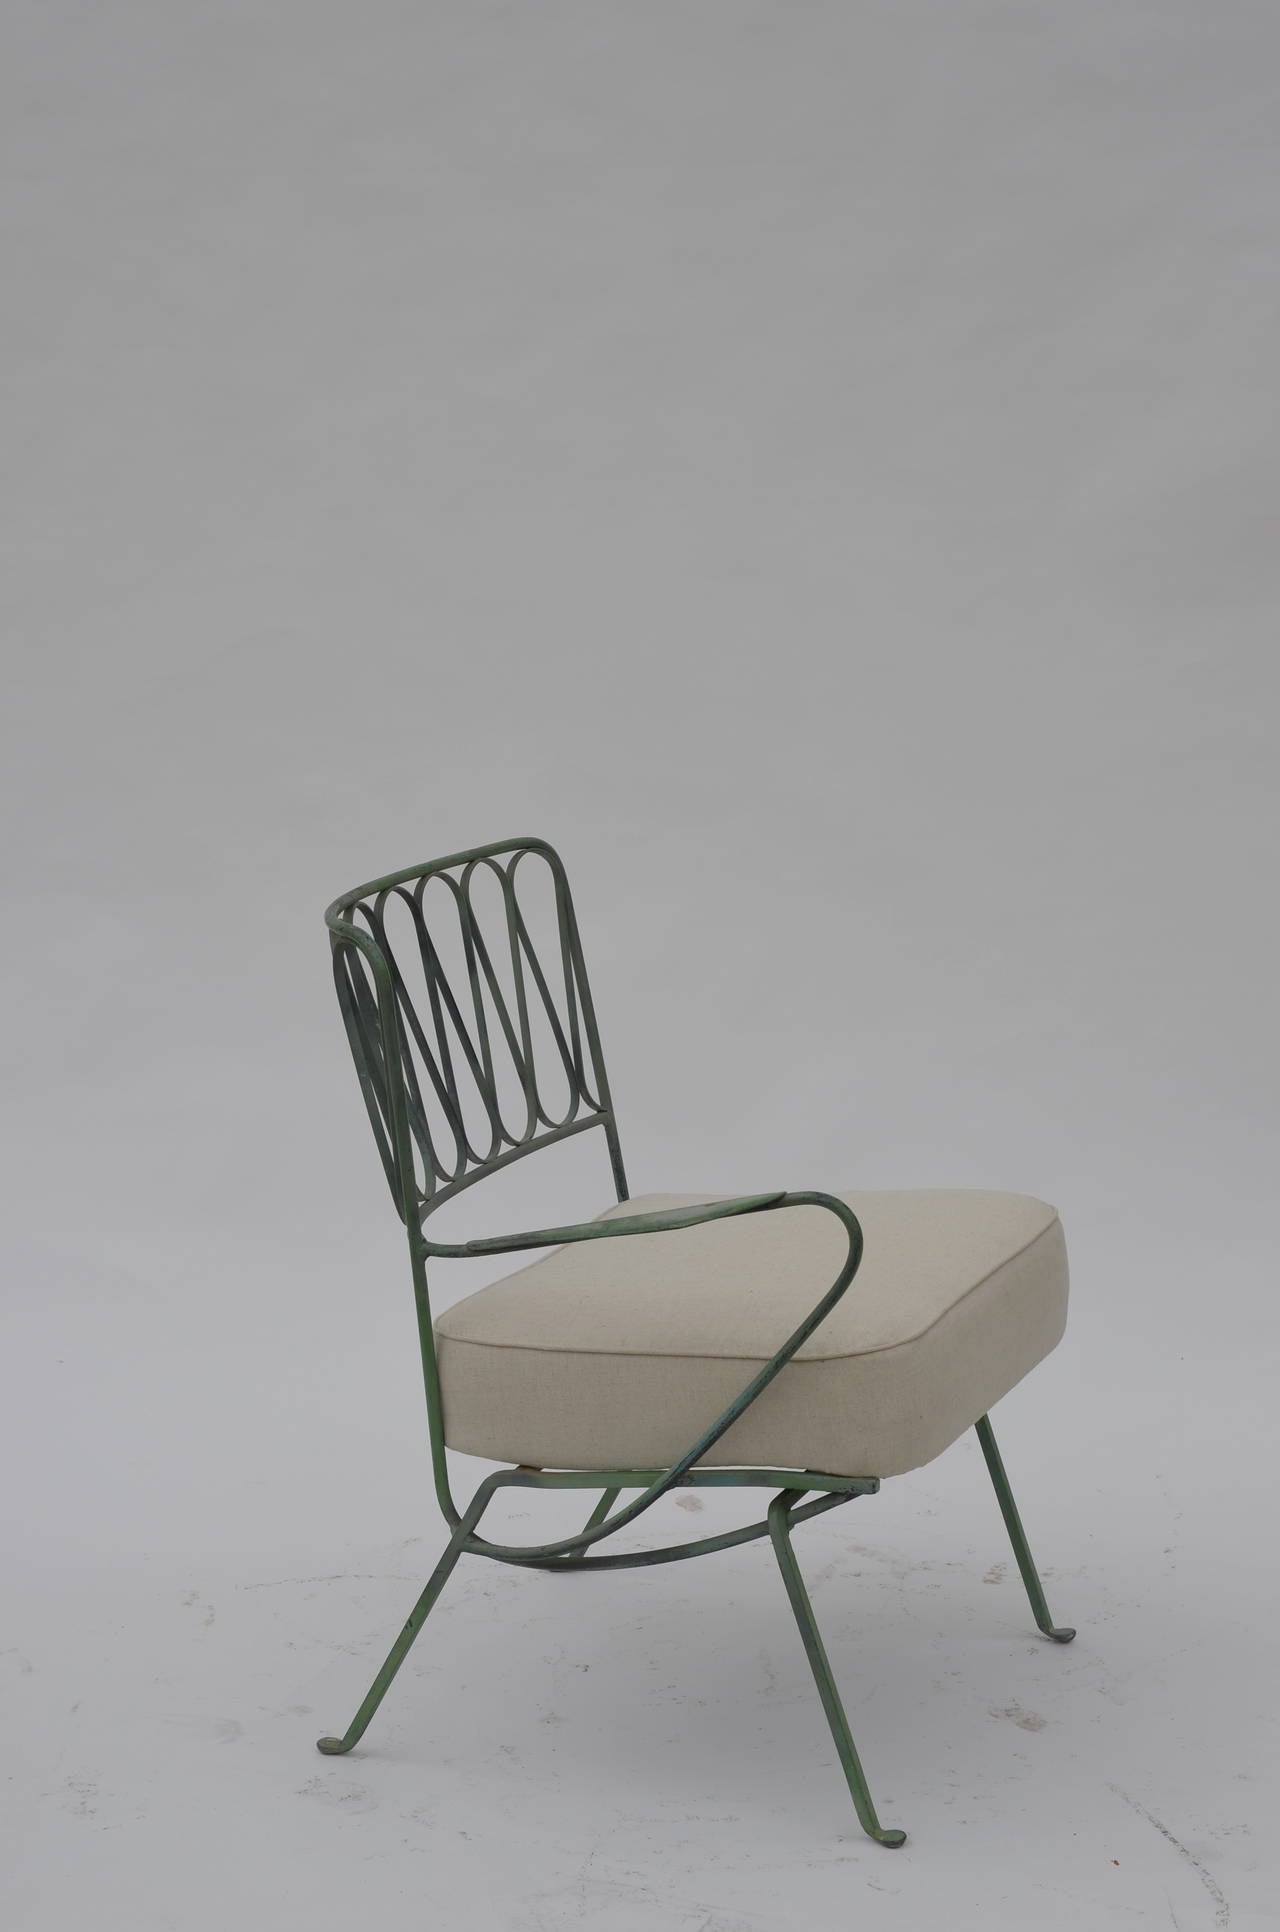 American Since Arm Corner Indoor Outdoor Chair by Salterini